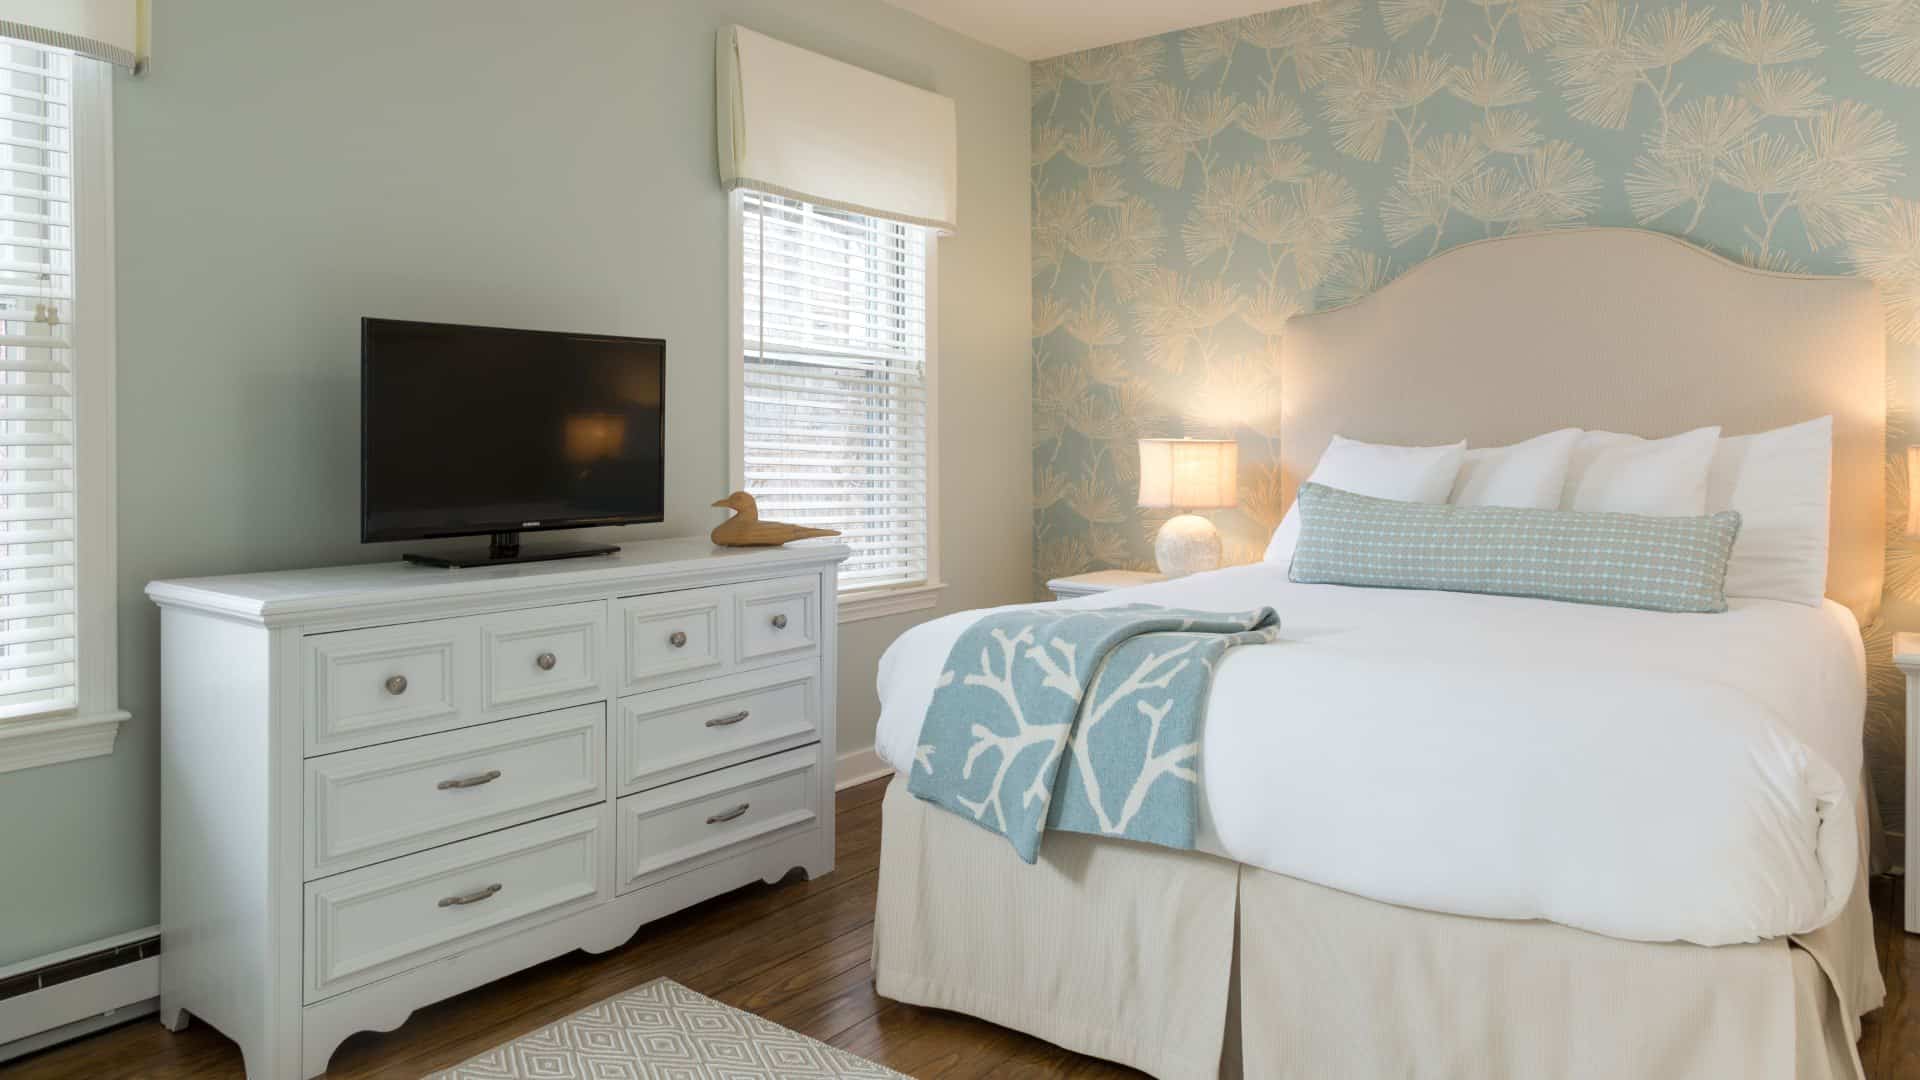 Bedroom with wooden flooring, light green walls, cream upholstered headboard, white bedding, and white dresser